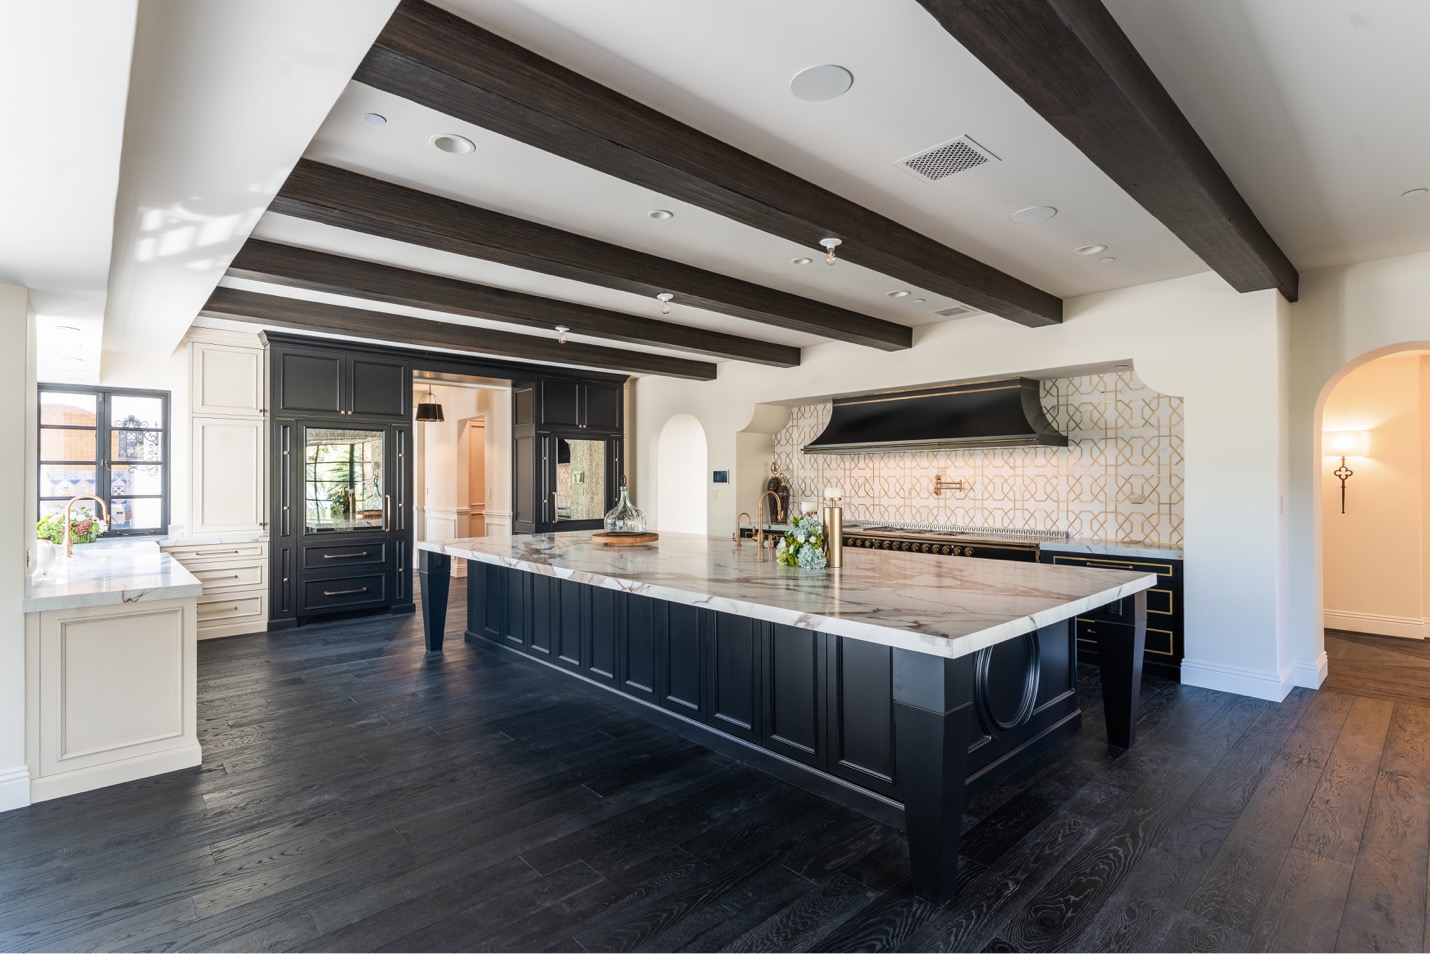 Modern kitchen renovation with quartzite countertops